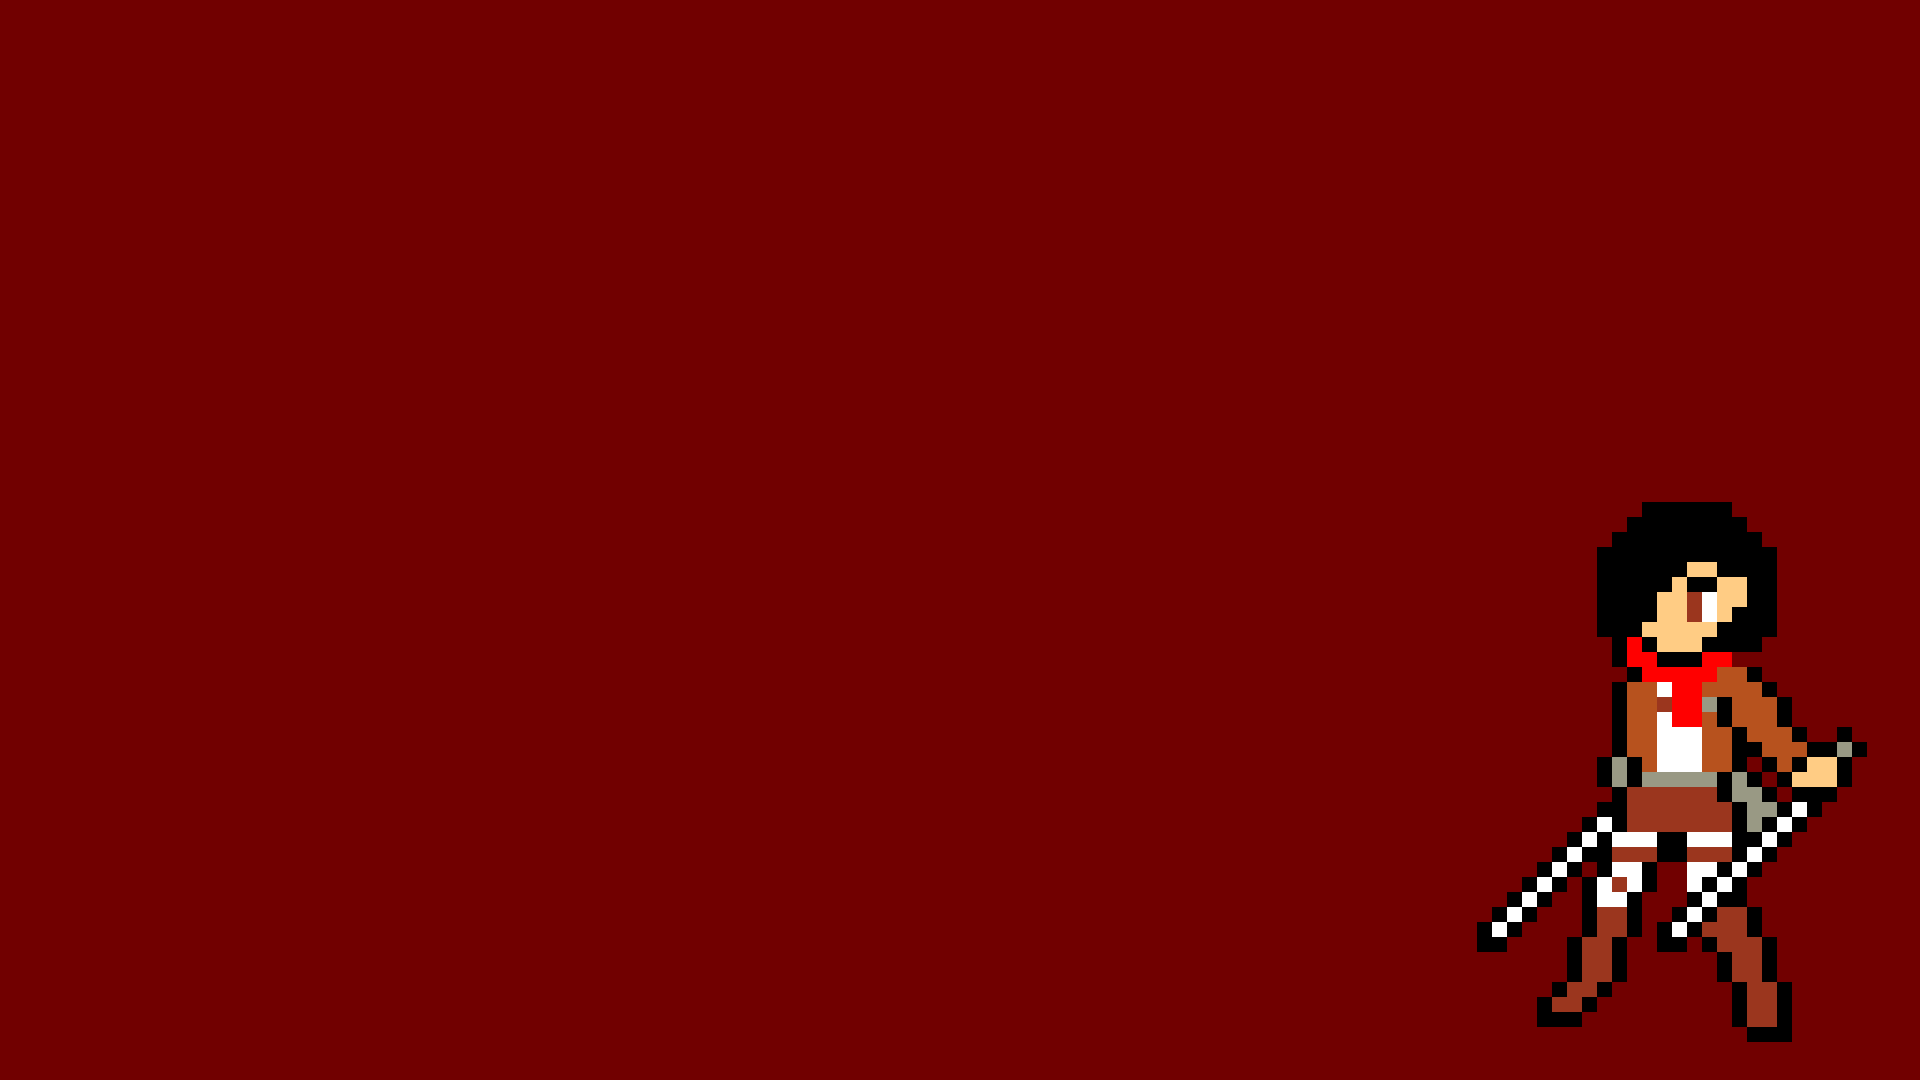 General 1920x1080 pixel art pixels Shingeki no Kyojin Mikasa Ackerman anime girls red background women with swords weapon simple background